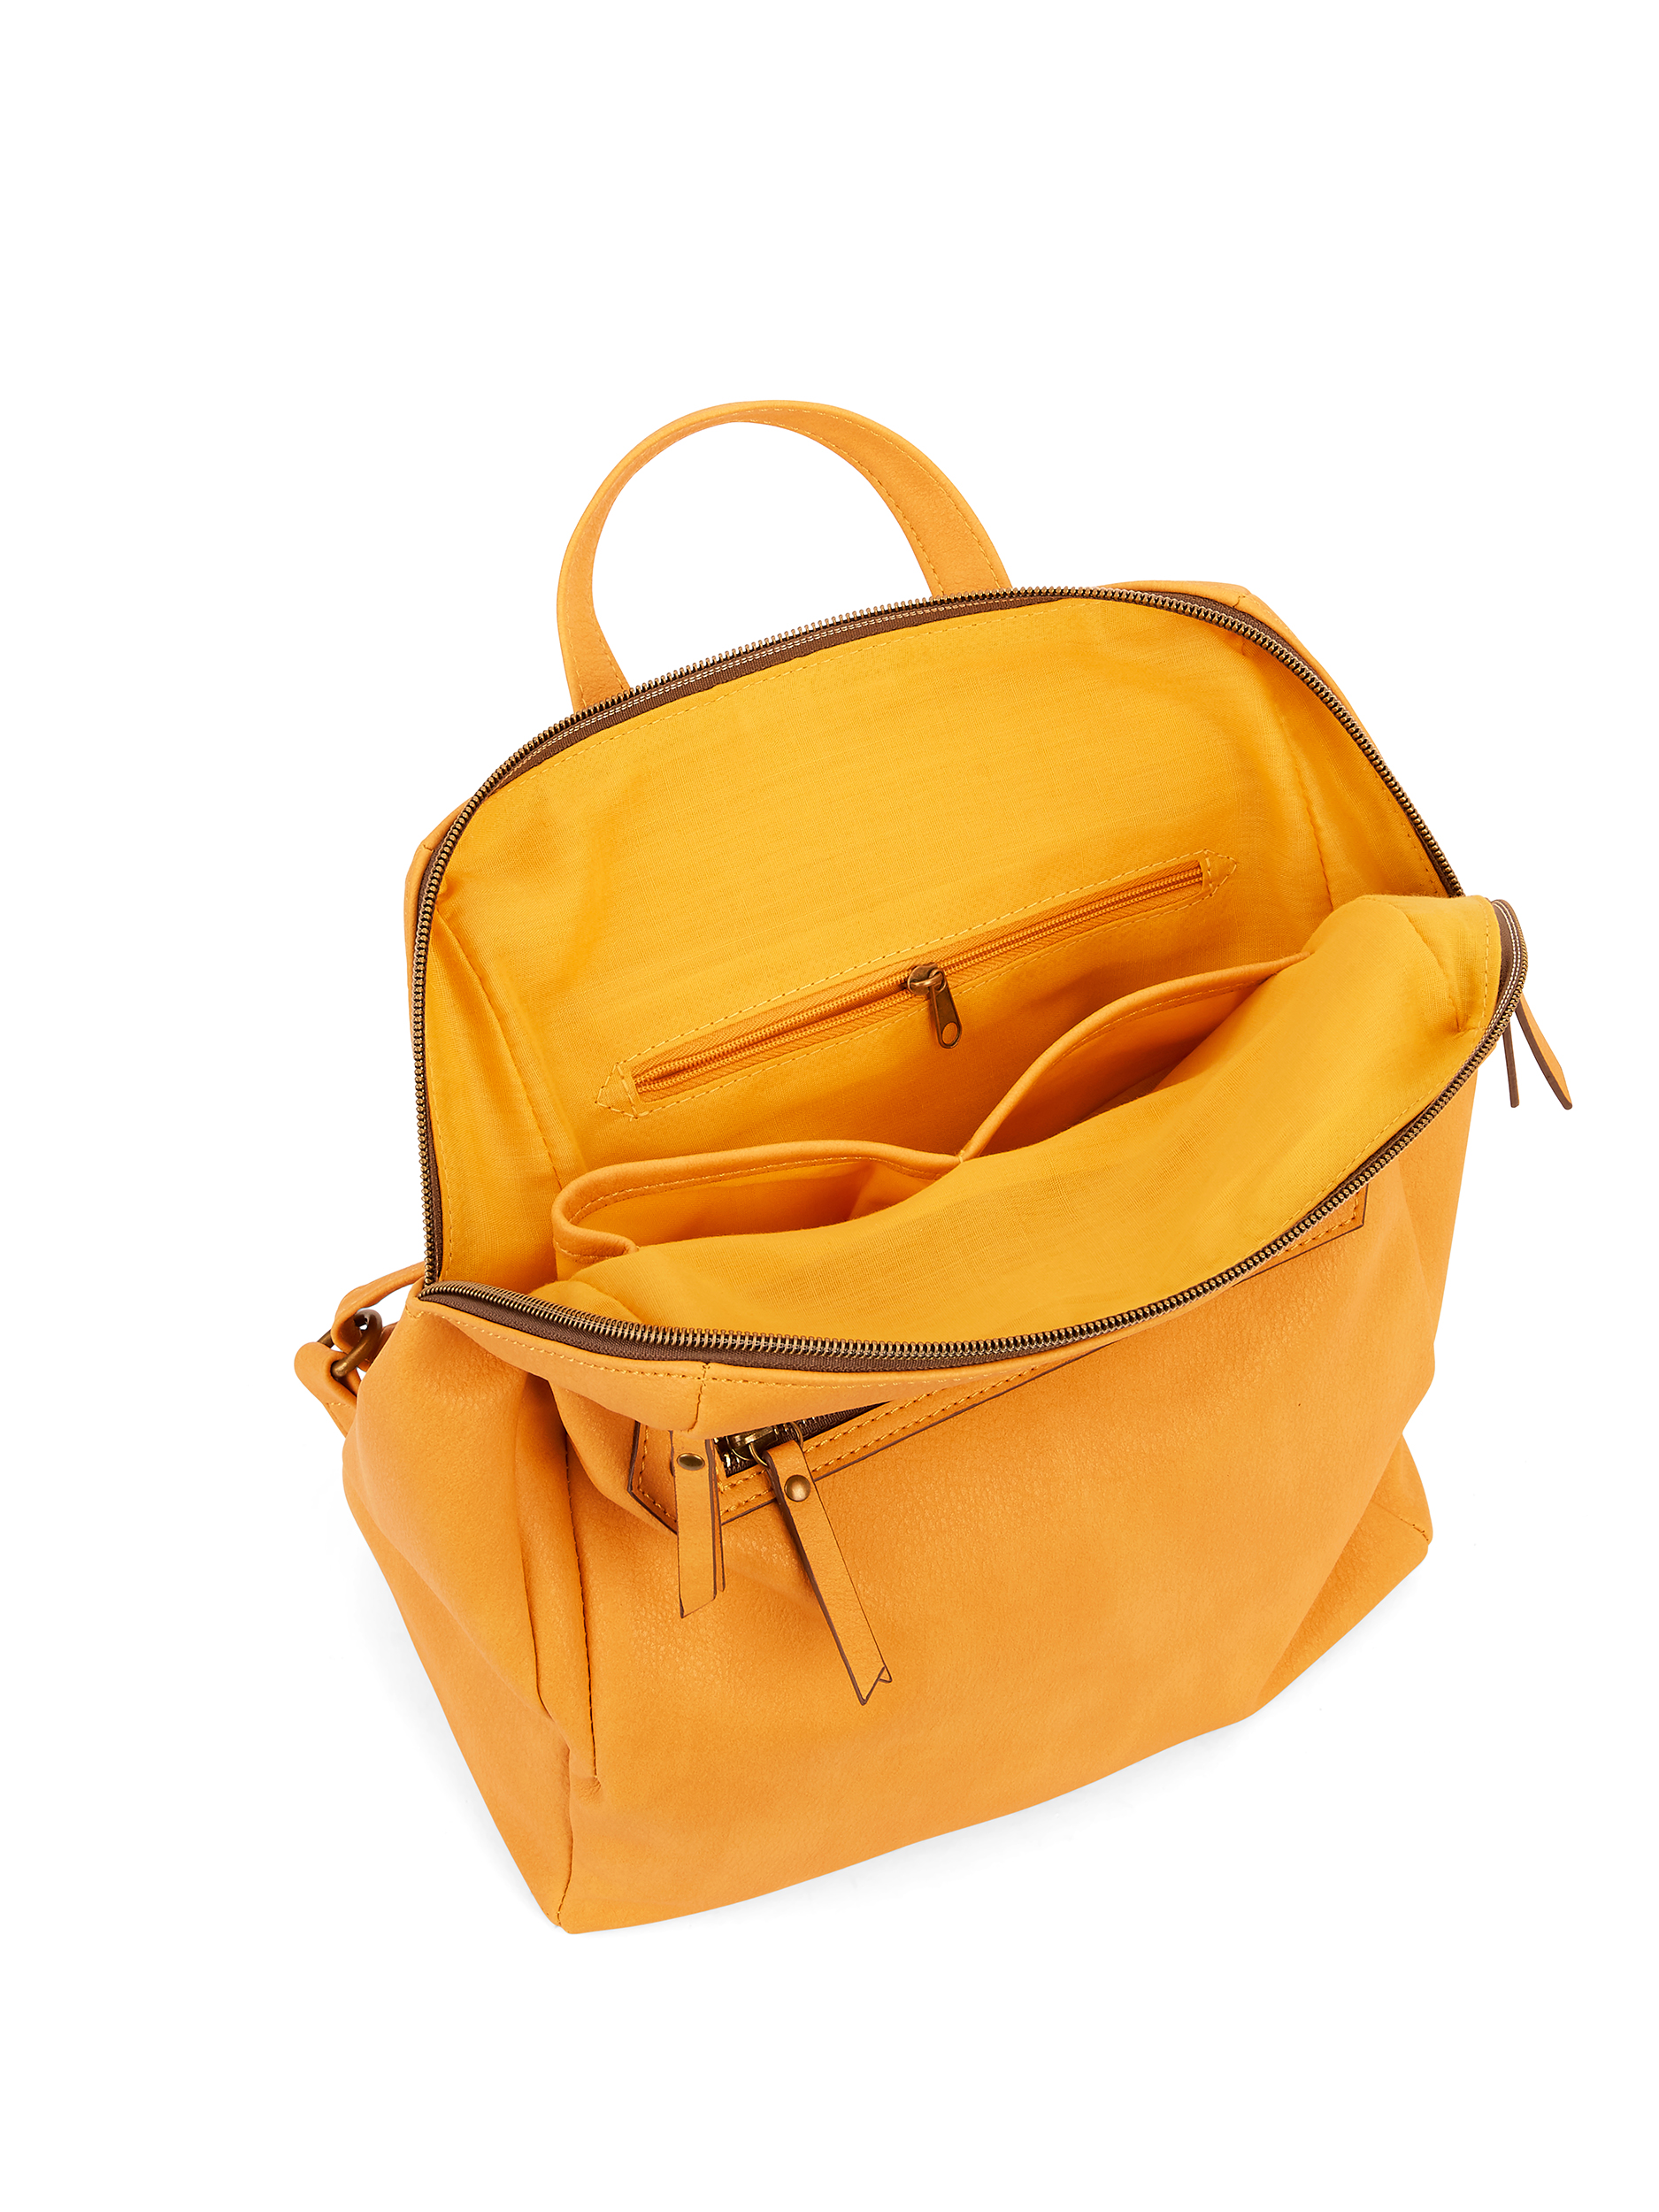 Time & Tru Cucamonga Backpack, Mustard - image 2 of 4